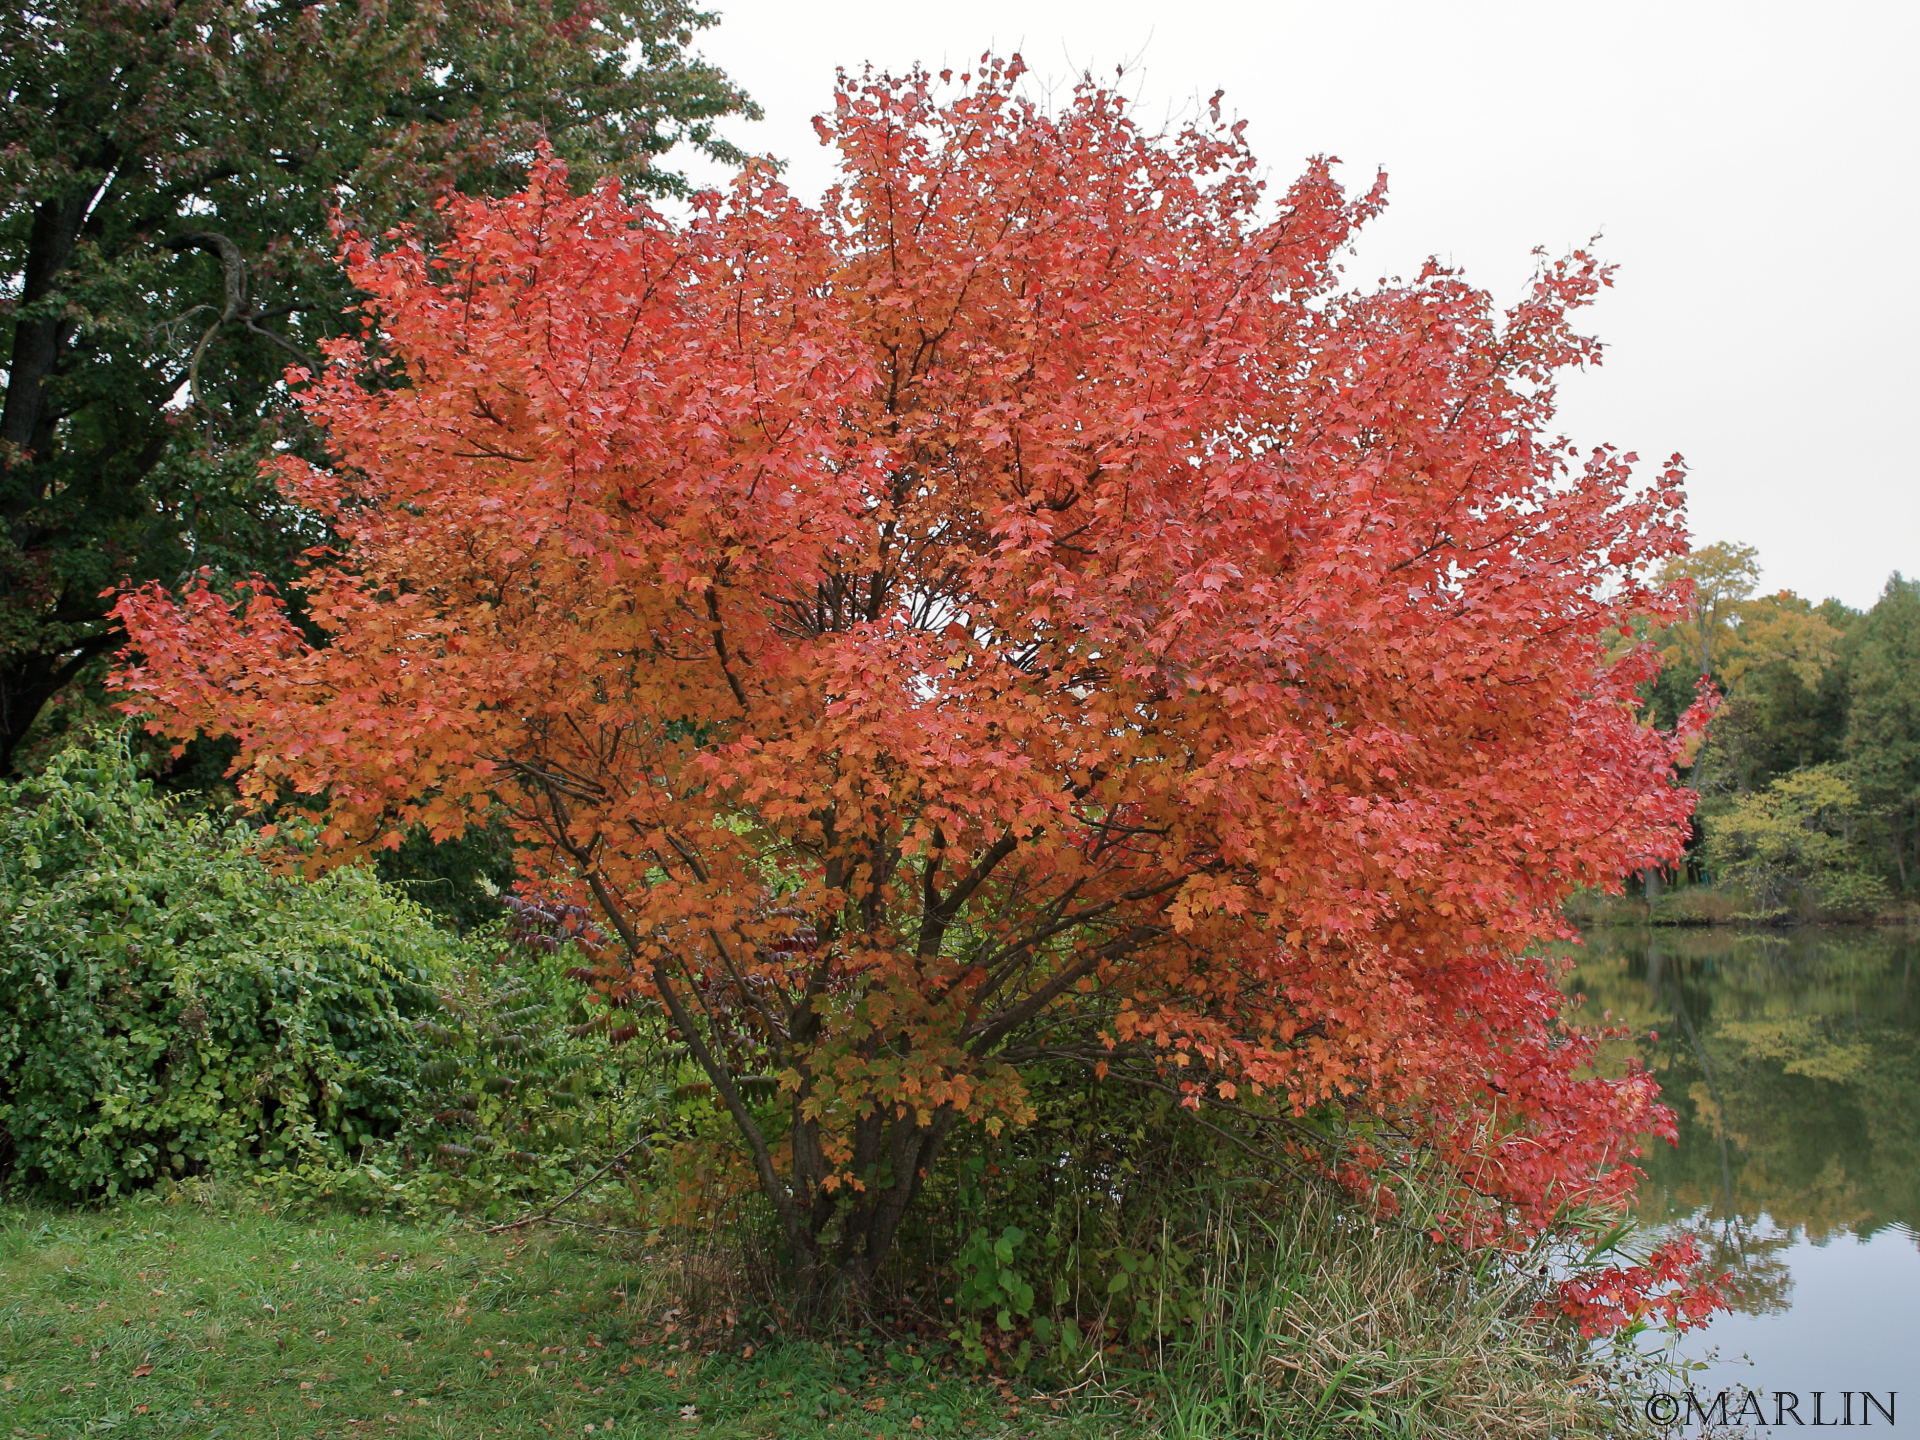 Autumn flame maple